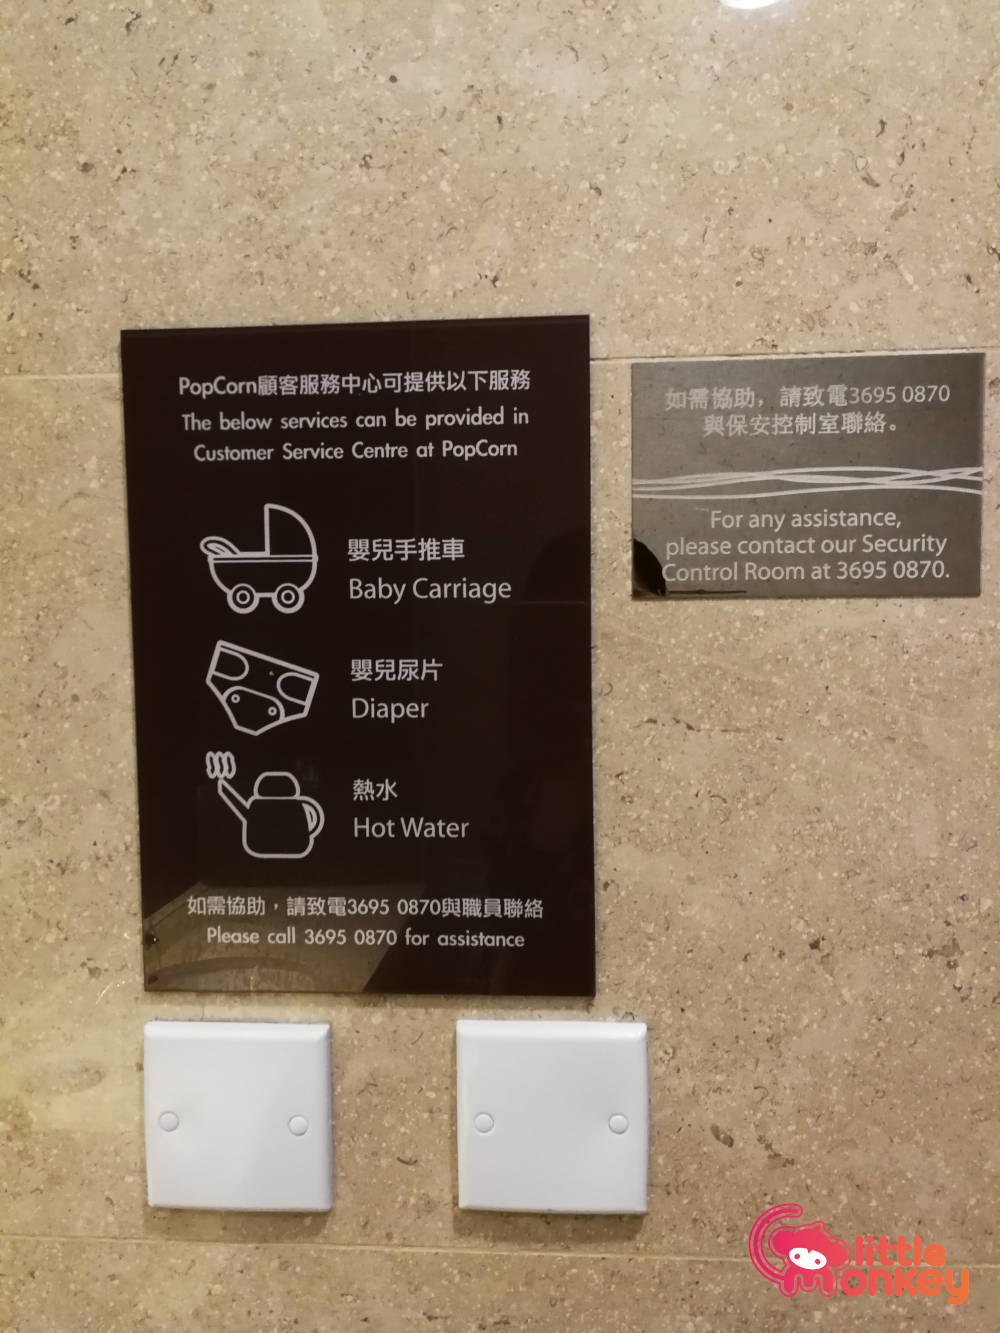 Service information of PopCorn Mall's nursery room at Tseung Kwan O